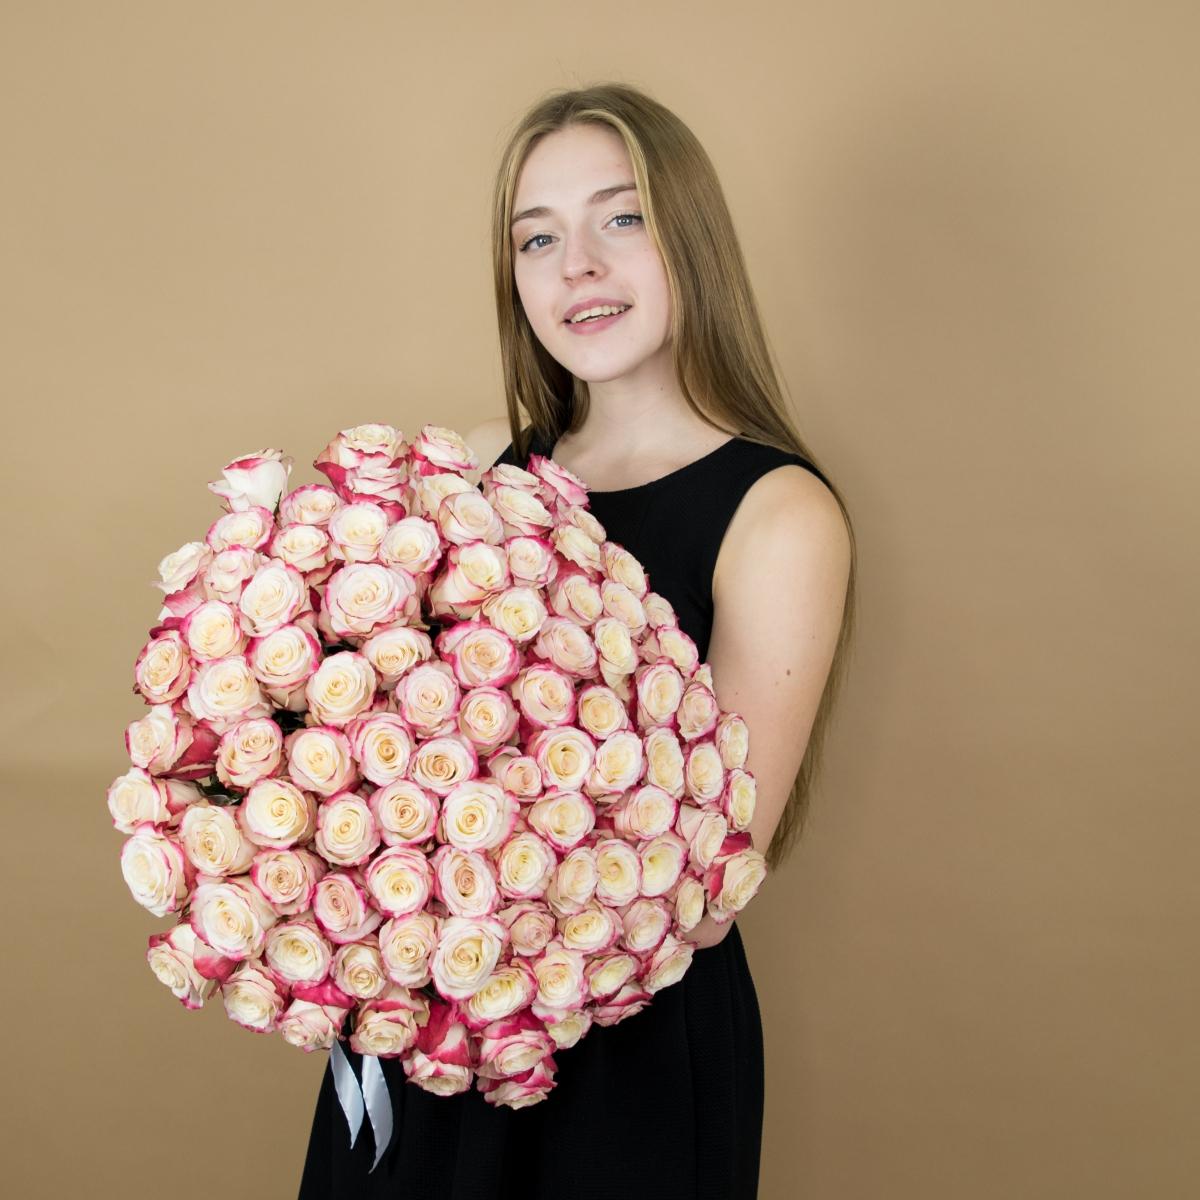 Розы красно-белые (40 см) Эквадор артикул букета: 450